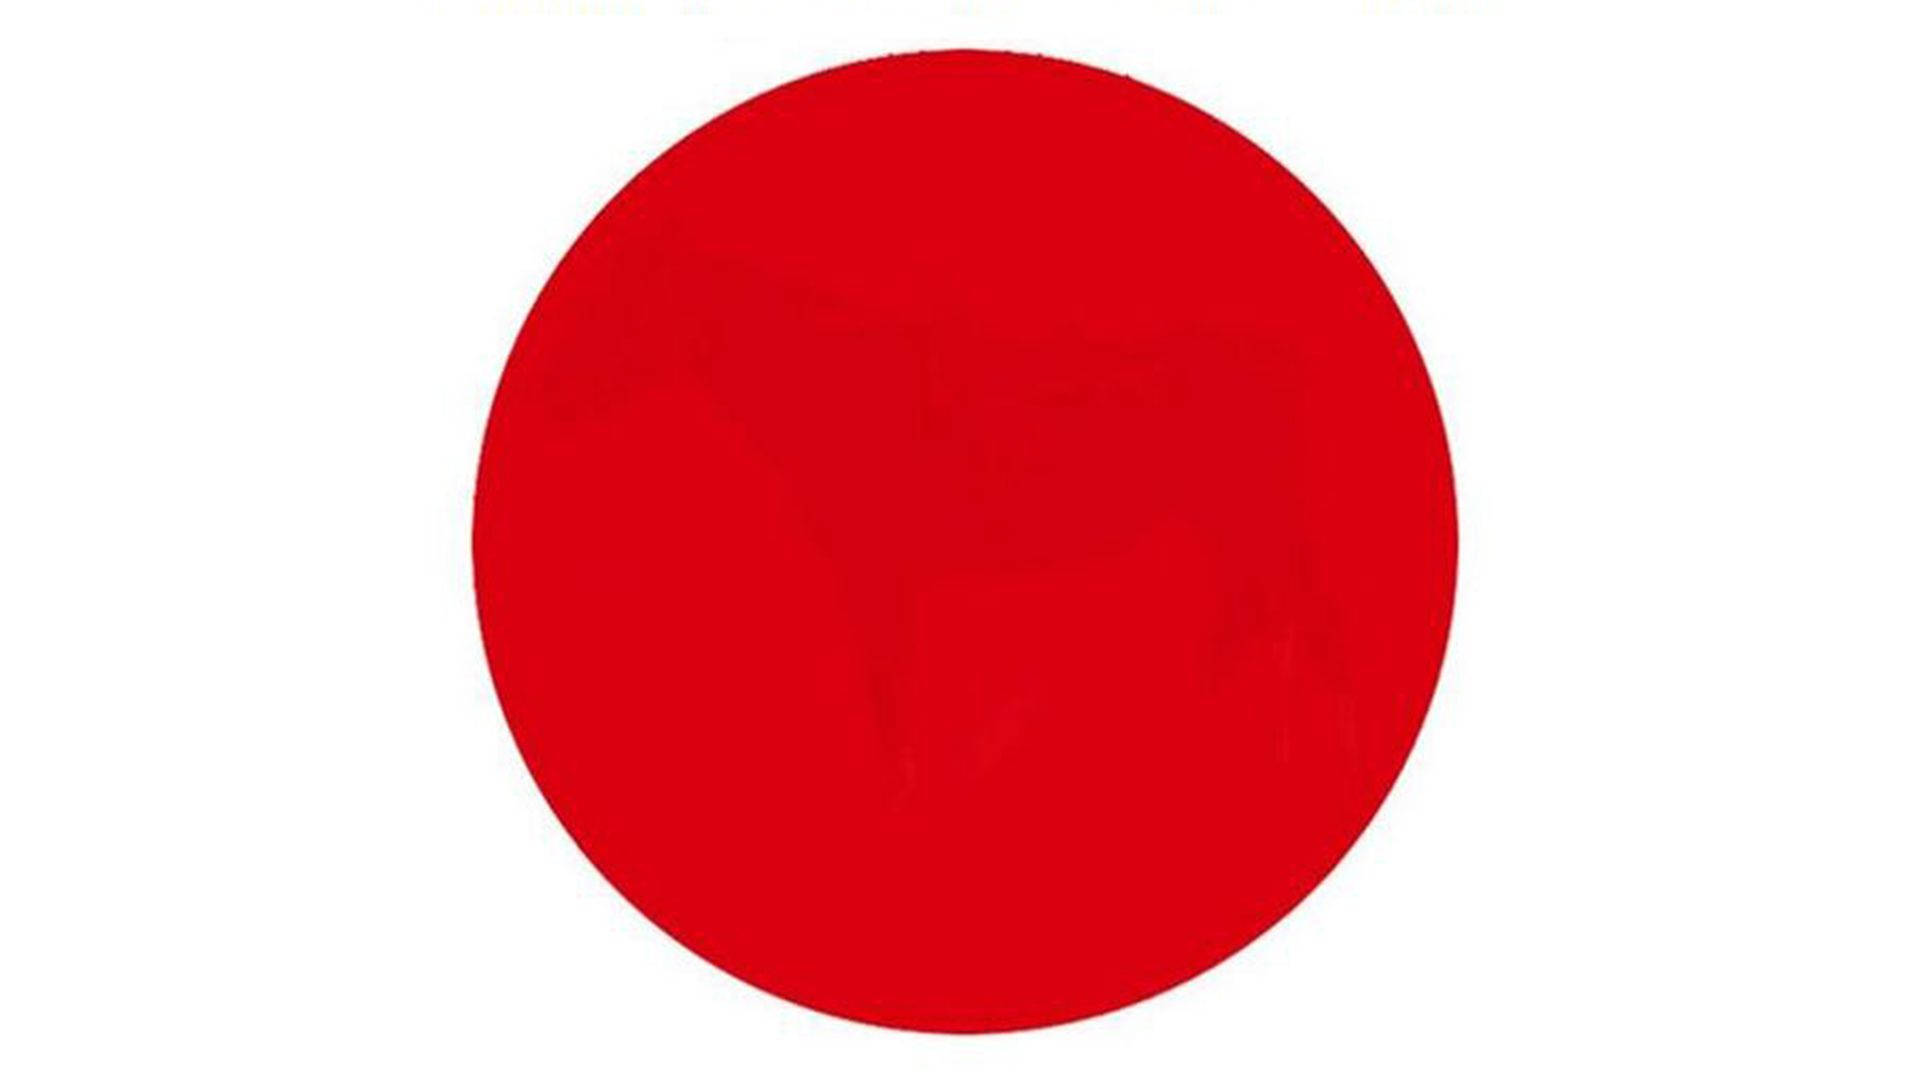 Red Circle Like Japan Flag Background